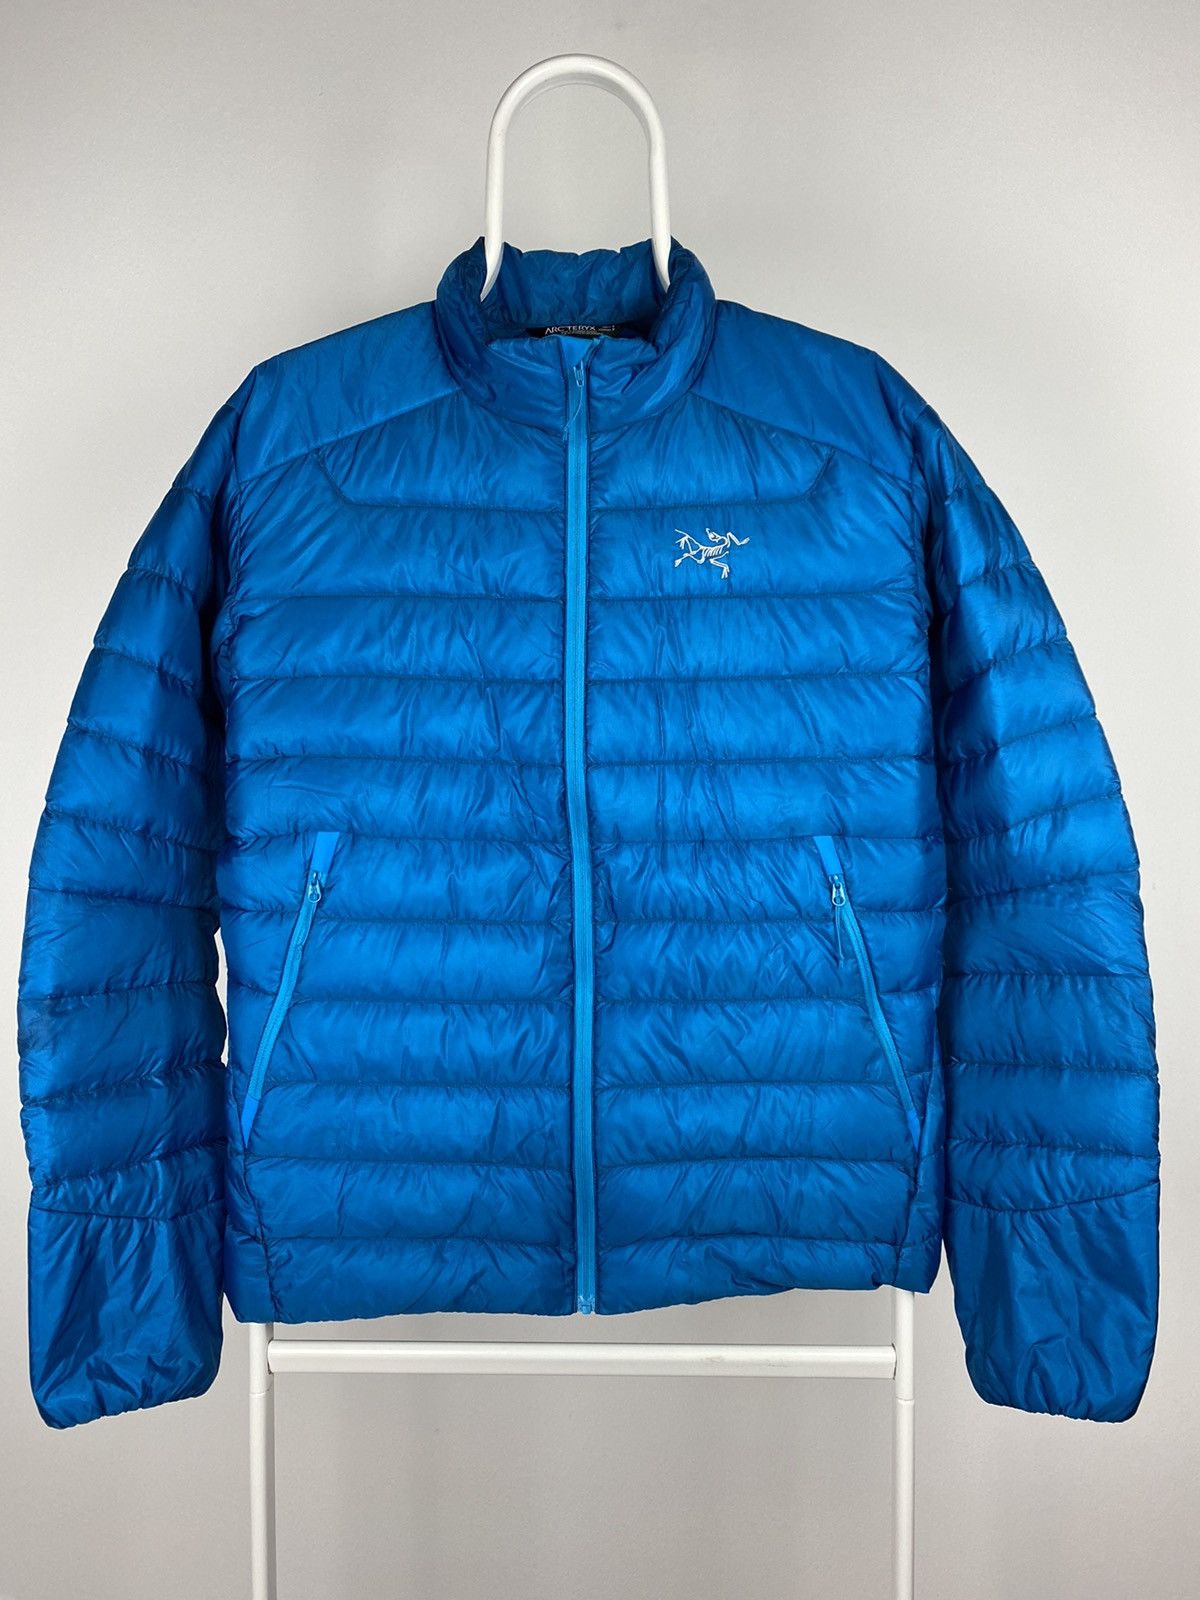 Arc'Teryx Arc’teryx Cerium LT hoody puffer jacket hooded baby blue ...